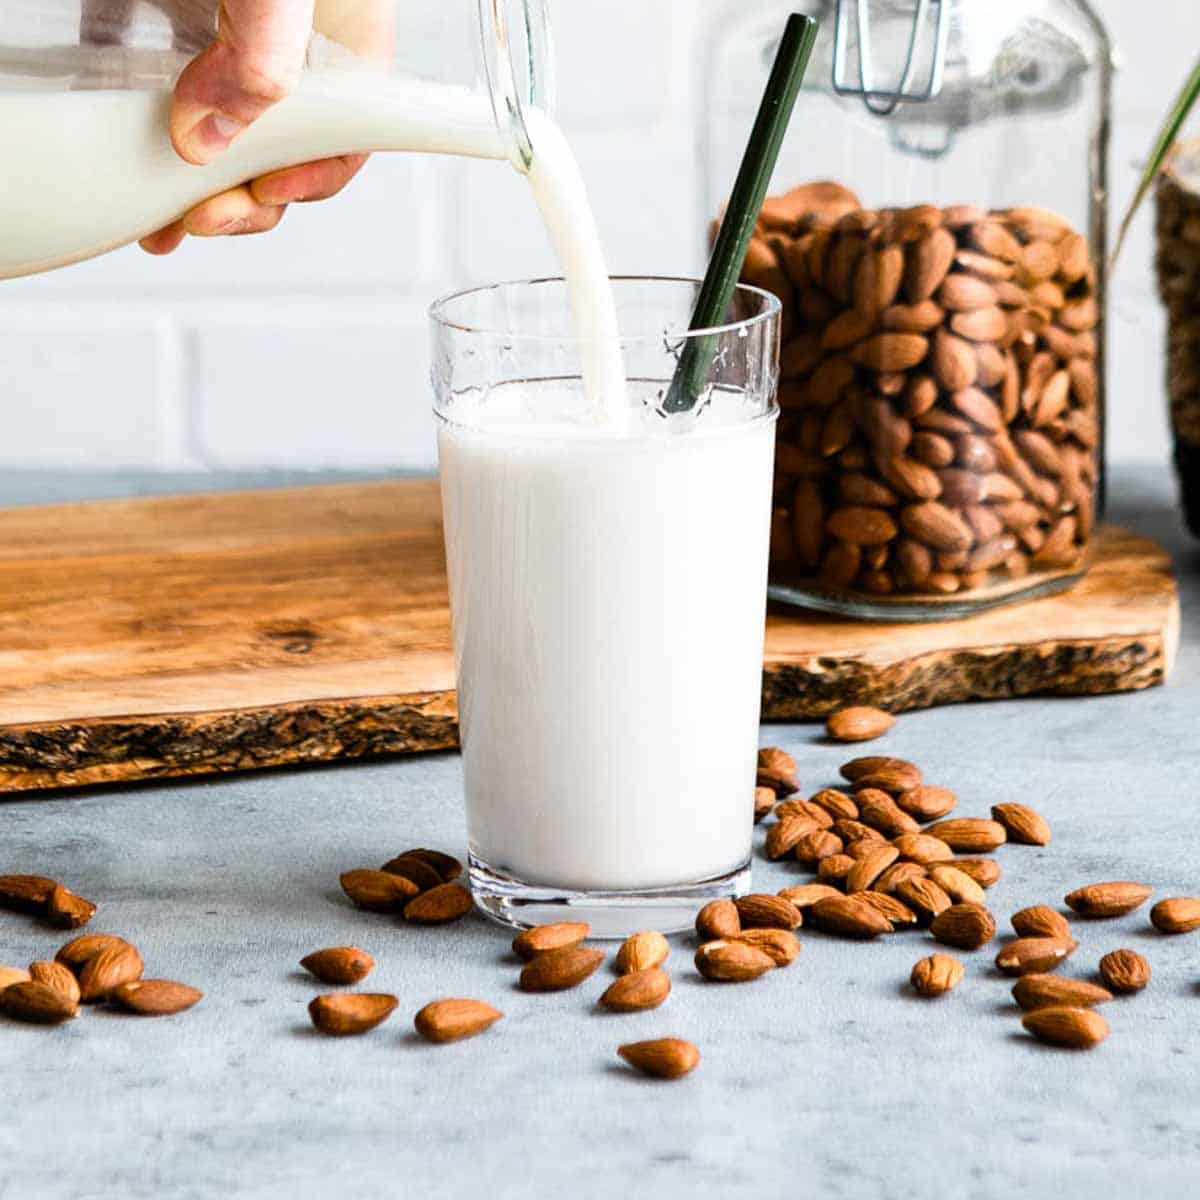 How to make homemade almond milk